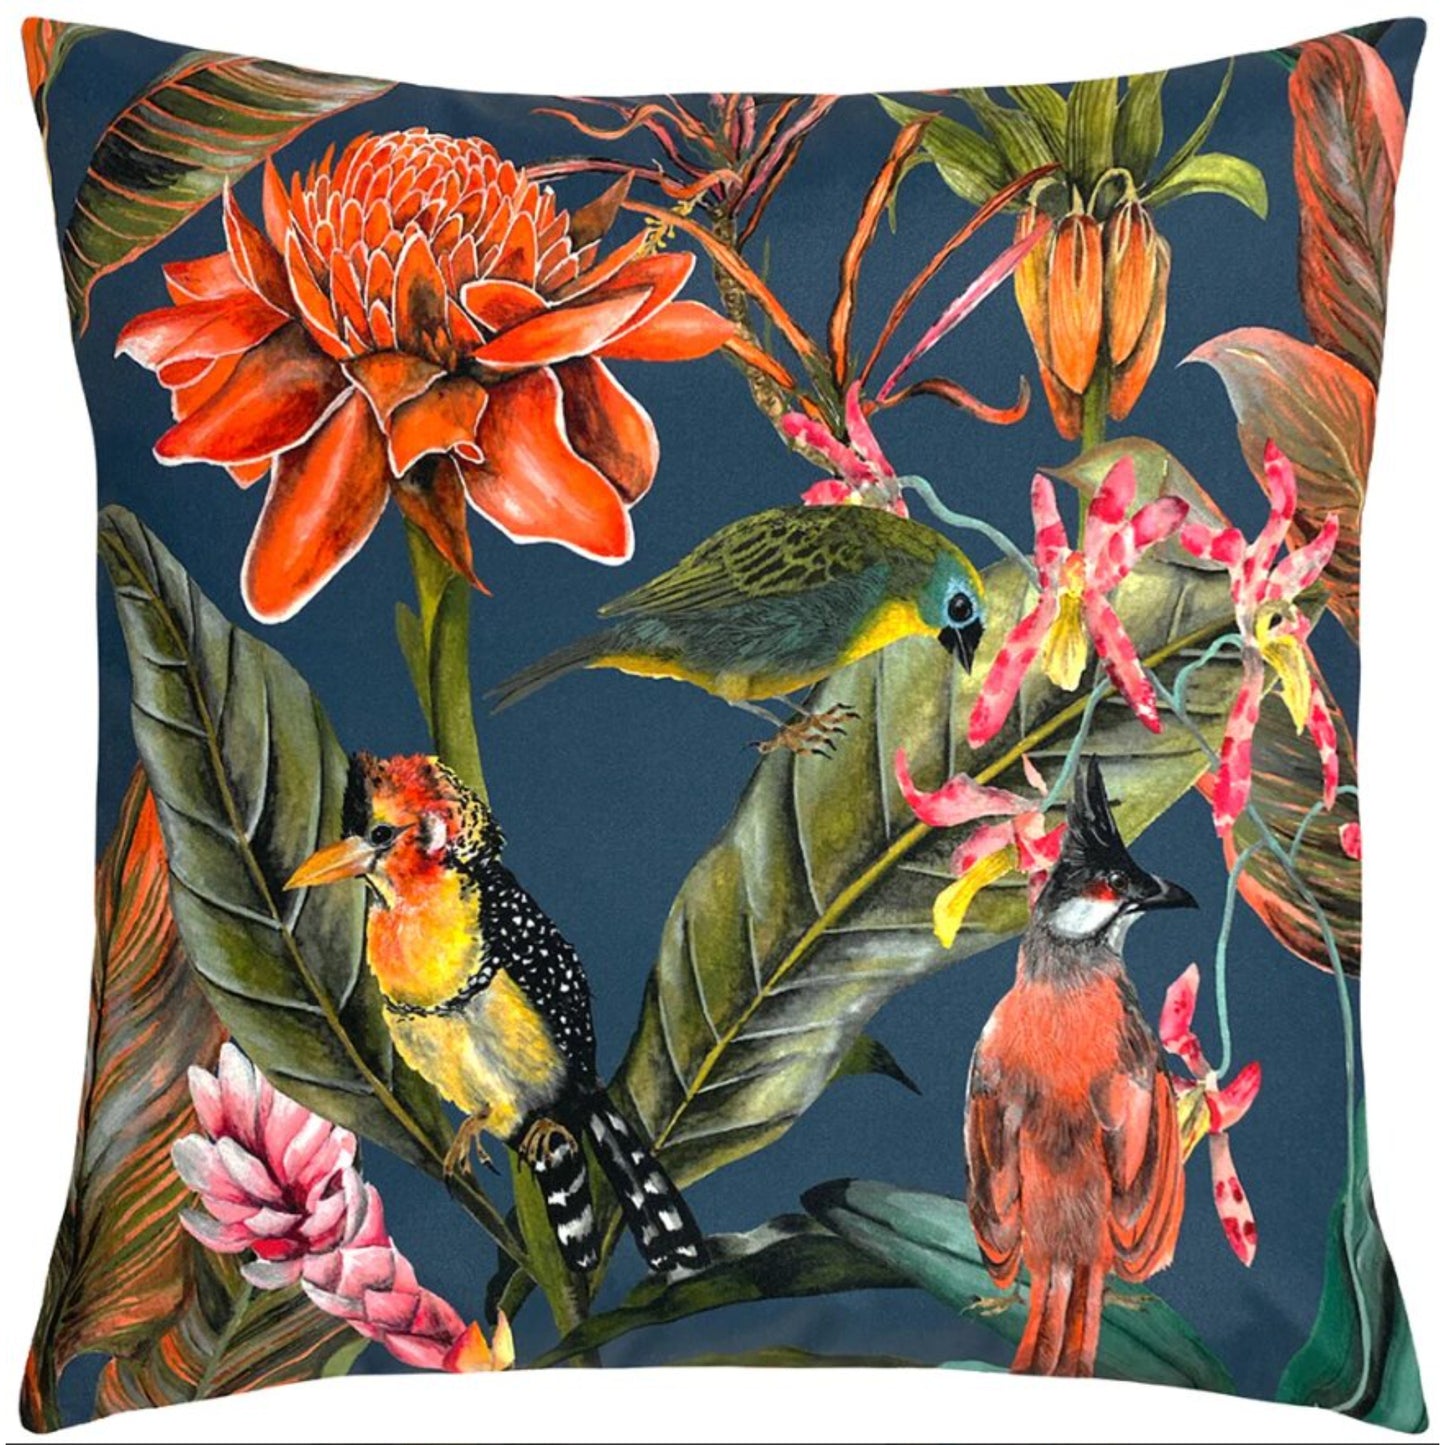 Decorative Outdoor Cushion "Exotic"